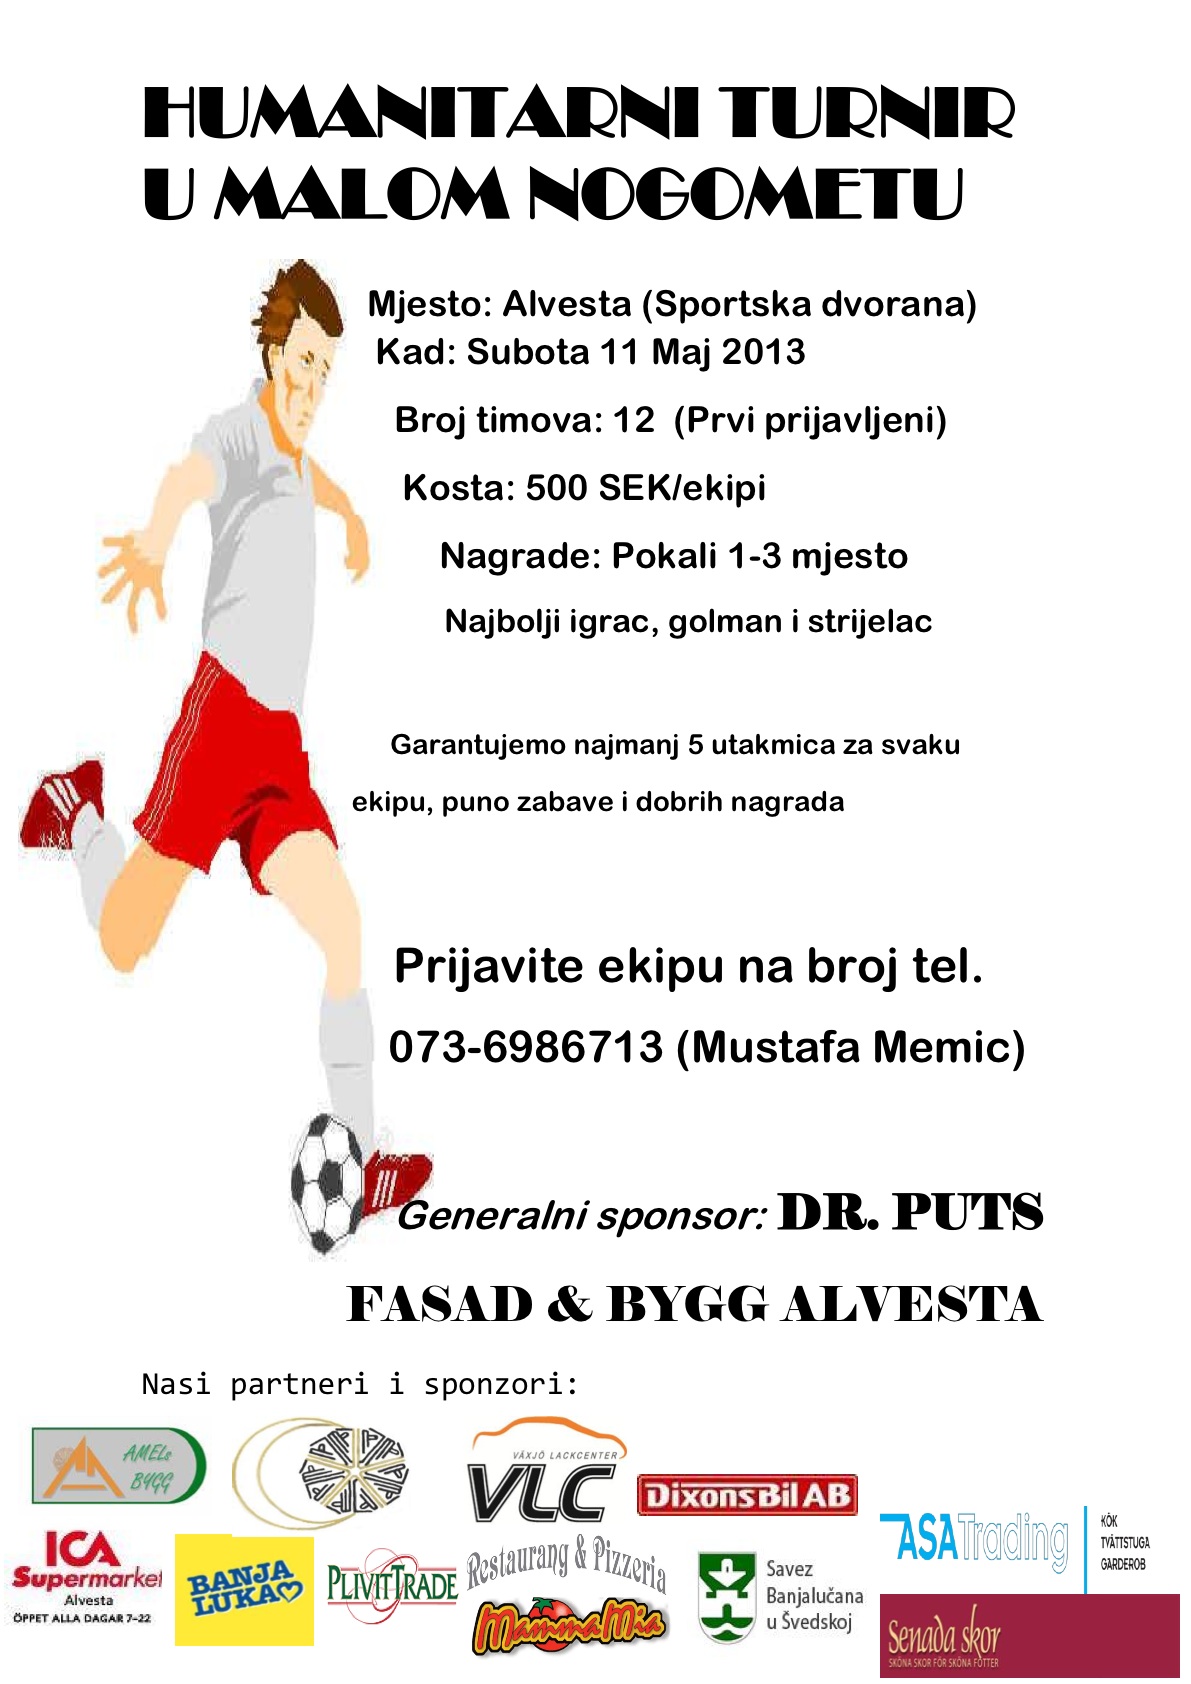 blusrcu.ba-Humanitarni turnir u malom nogometu 11. maj Alvesta